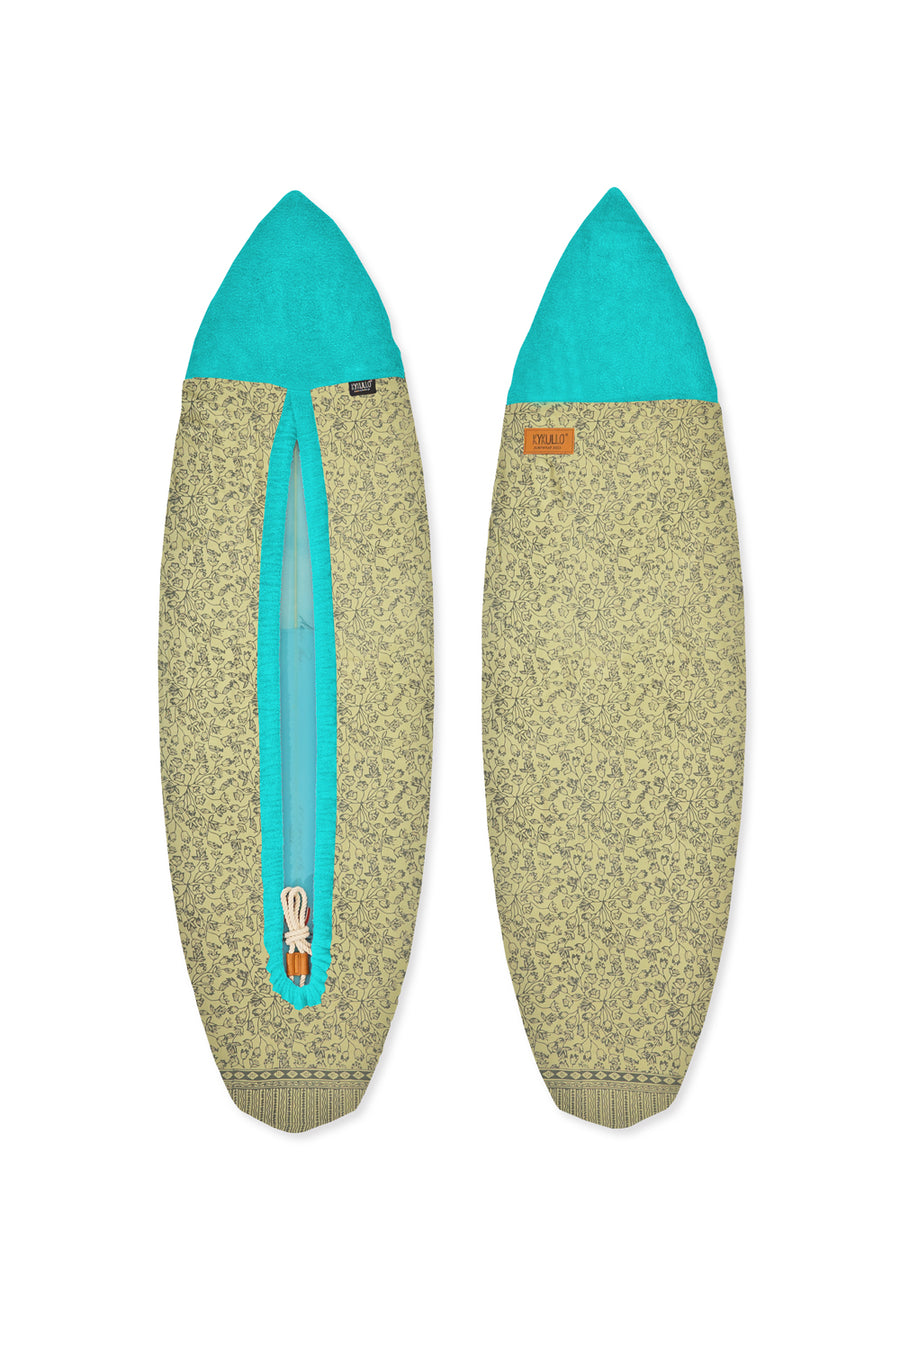 SURFWRAP 5'10 - TURQUOISE (RETAIL)